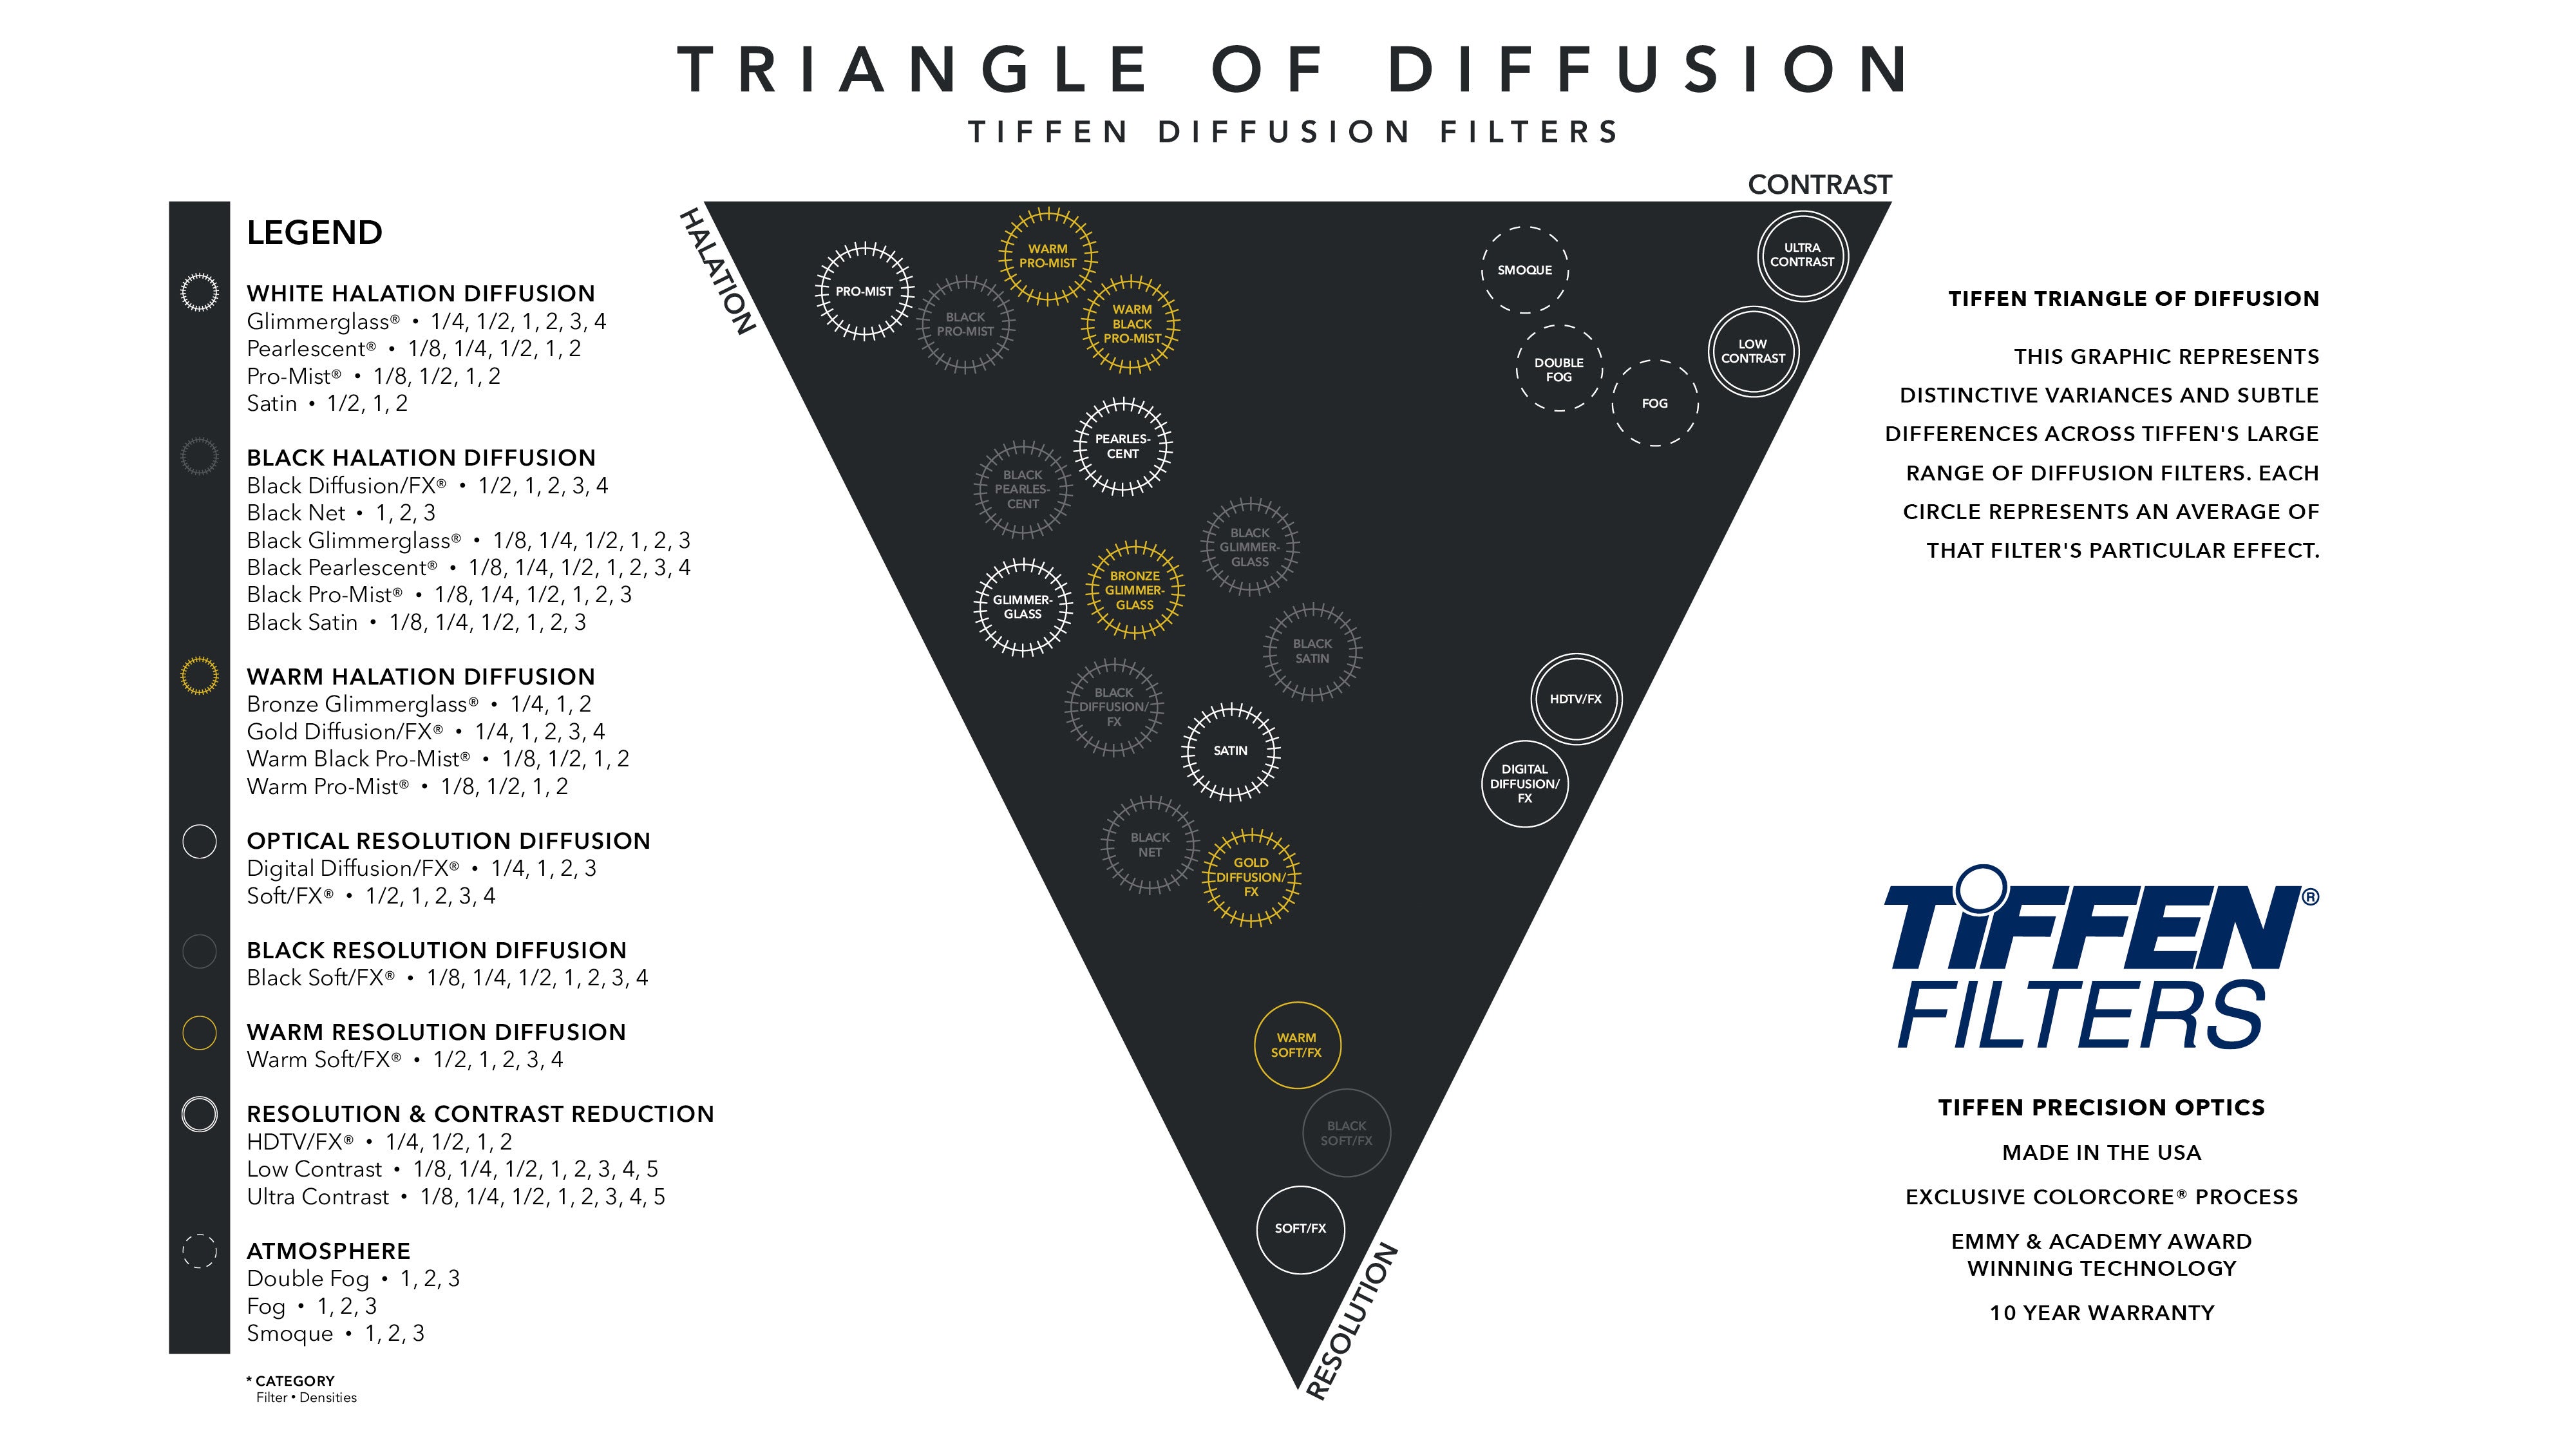 TriangleOfDiffusion-Web.jpg?8477